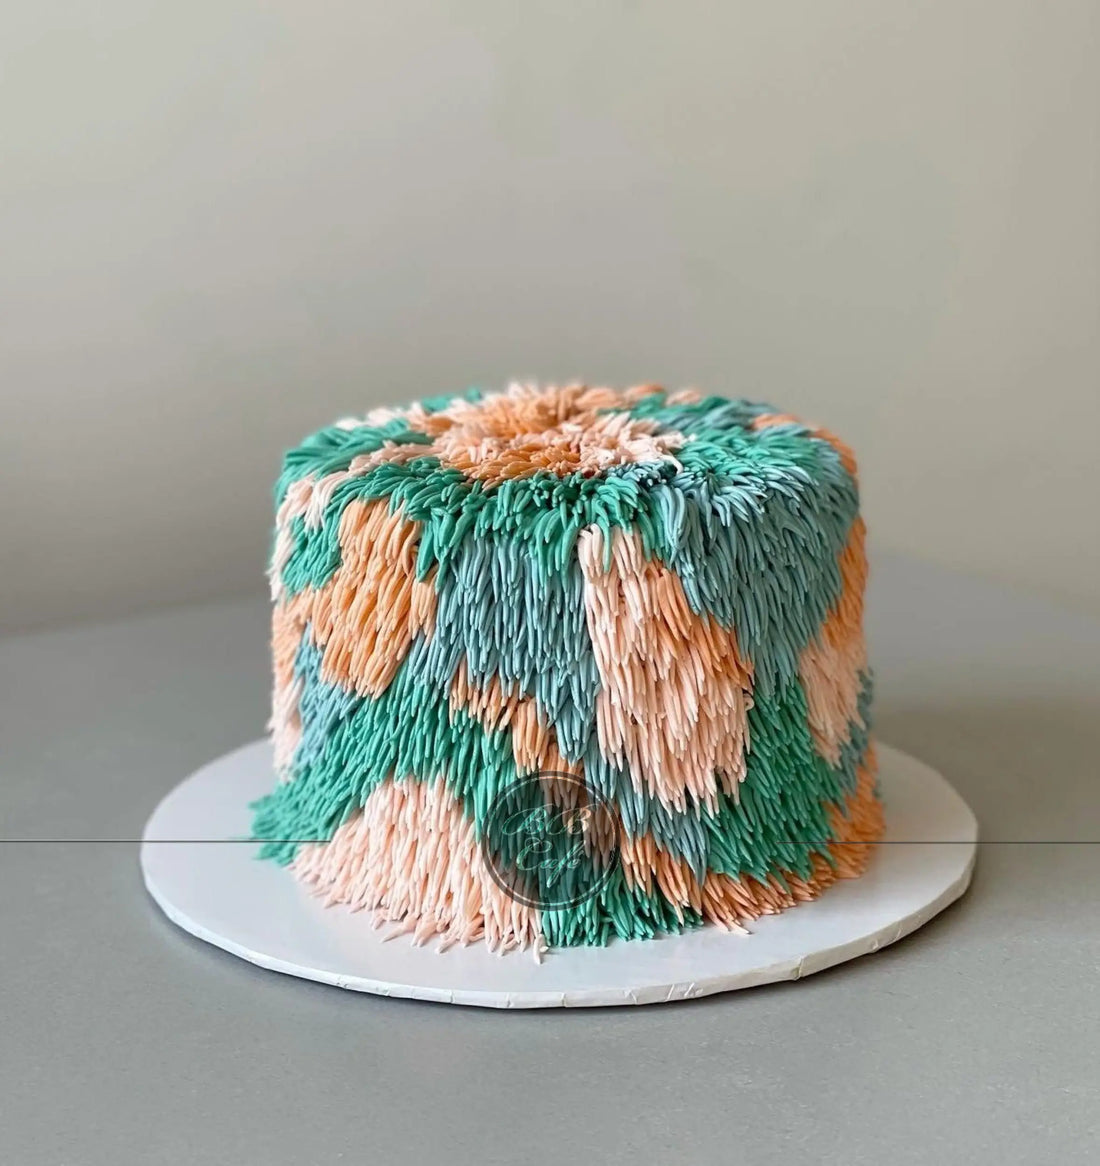 The shag on whipped cream - custom cake